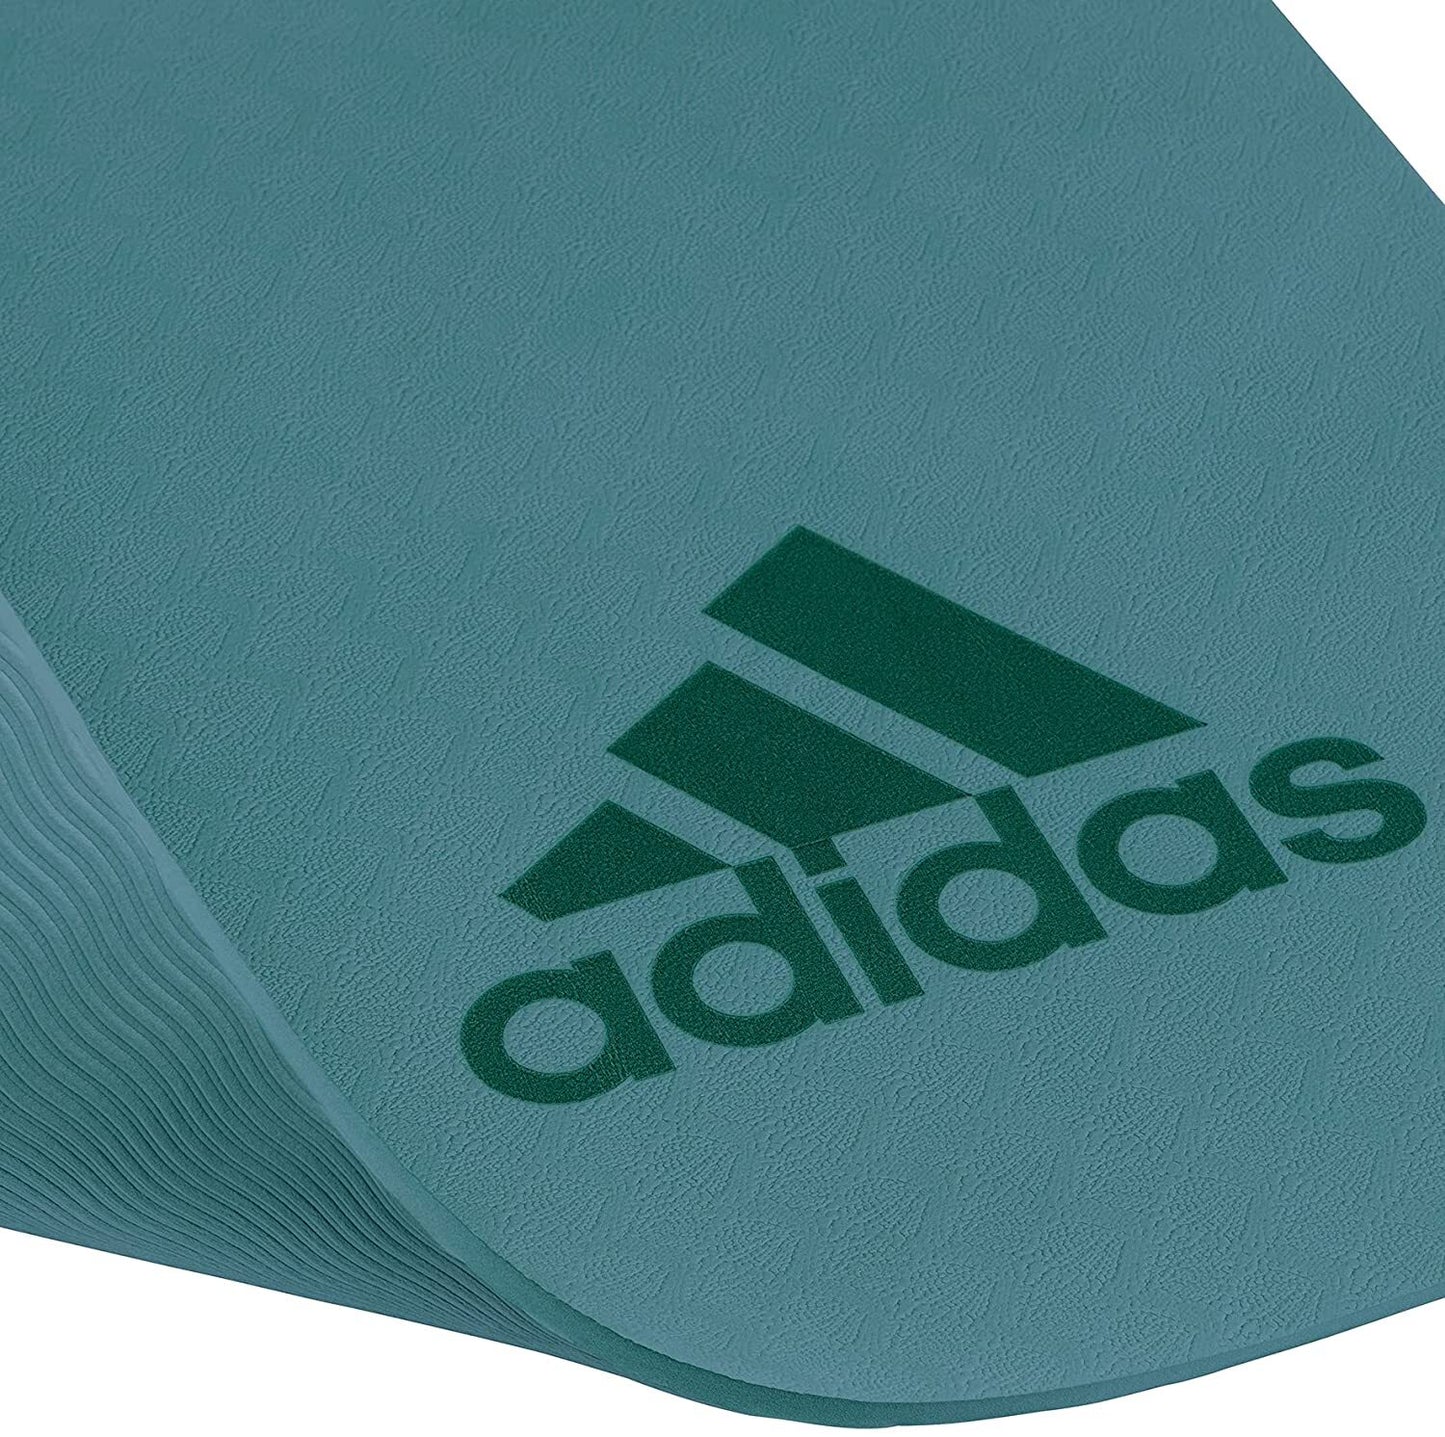 Adidas Premium 5mm Yoga Mat Fitness Gym Exercise Pilates Workout Non Slip Pad